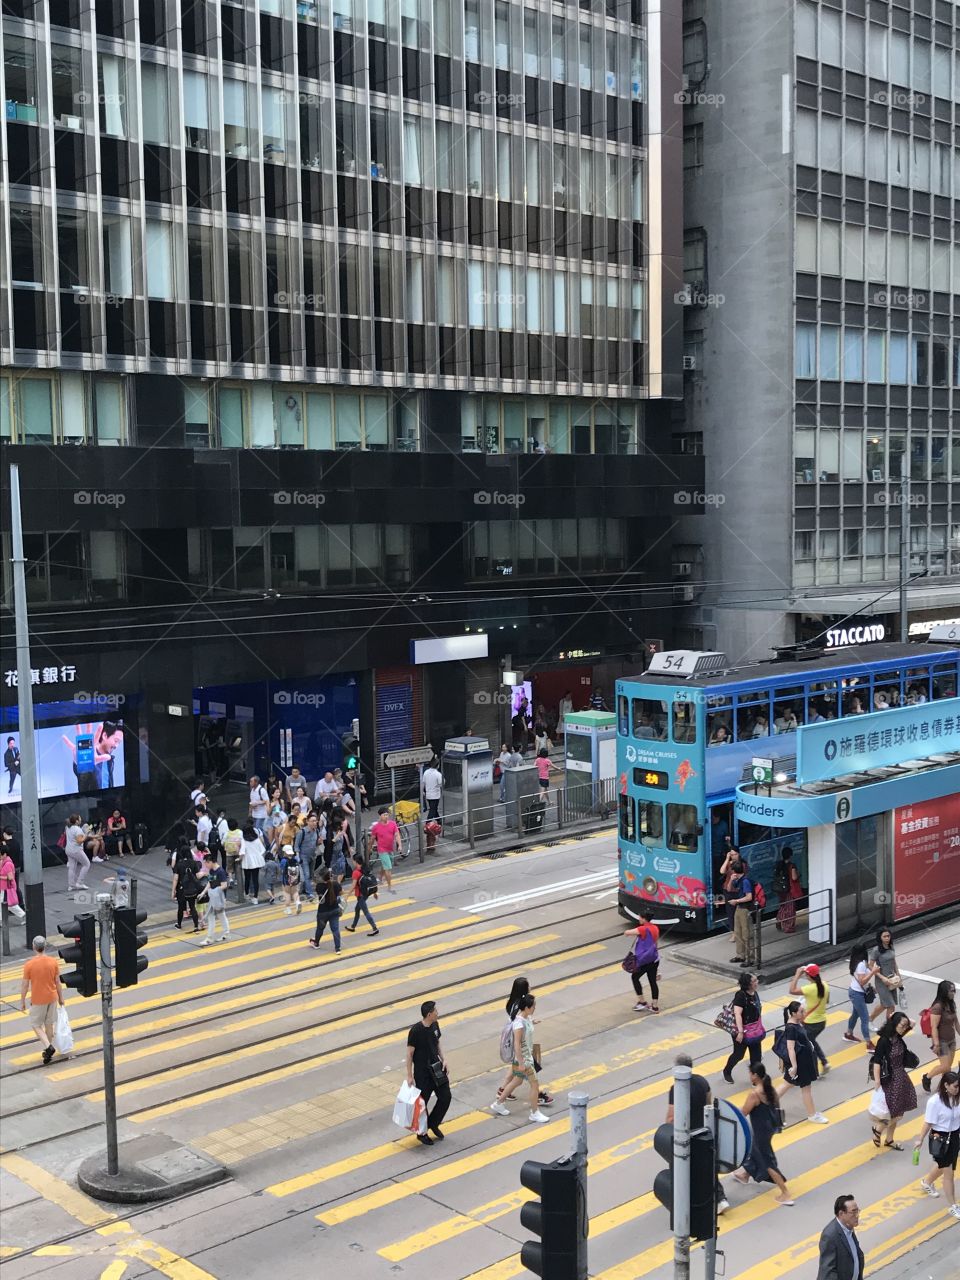 Bustling Saturday in Central, CBD of Hong Kong